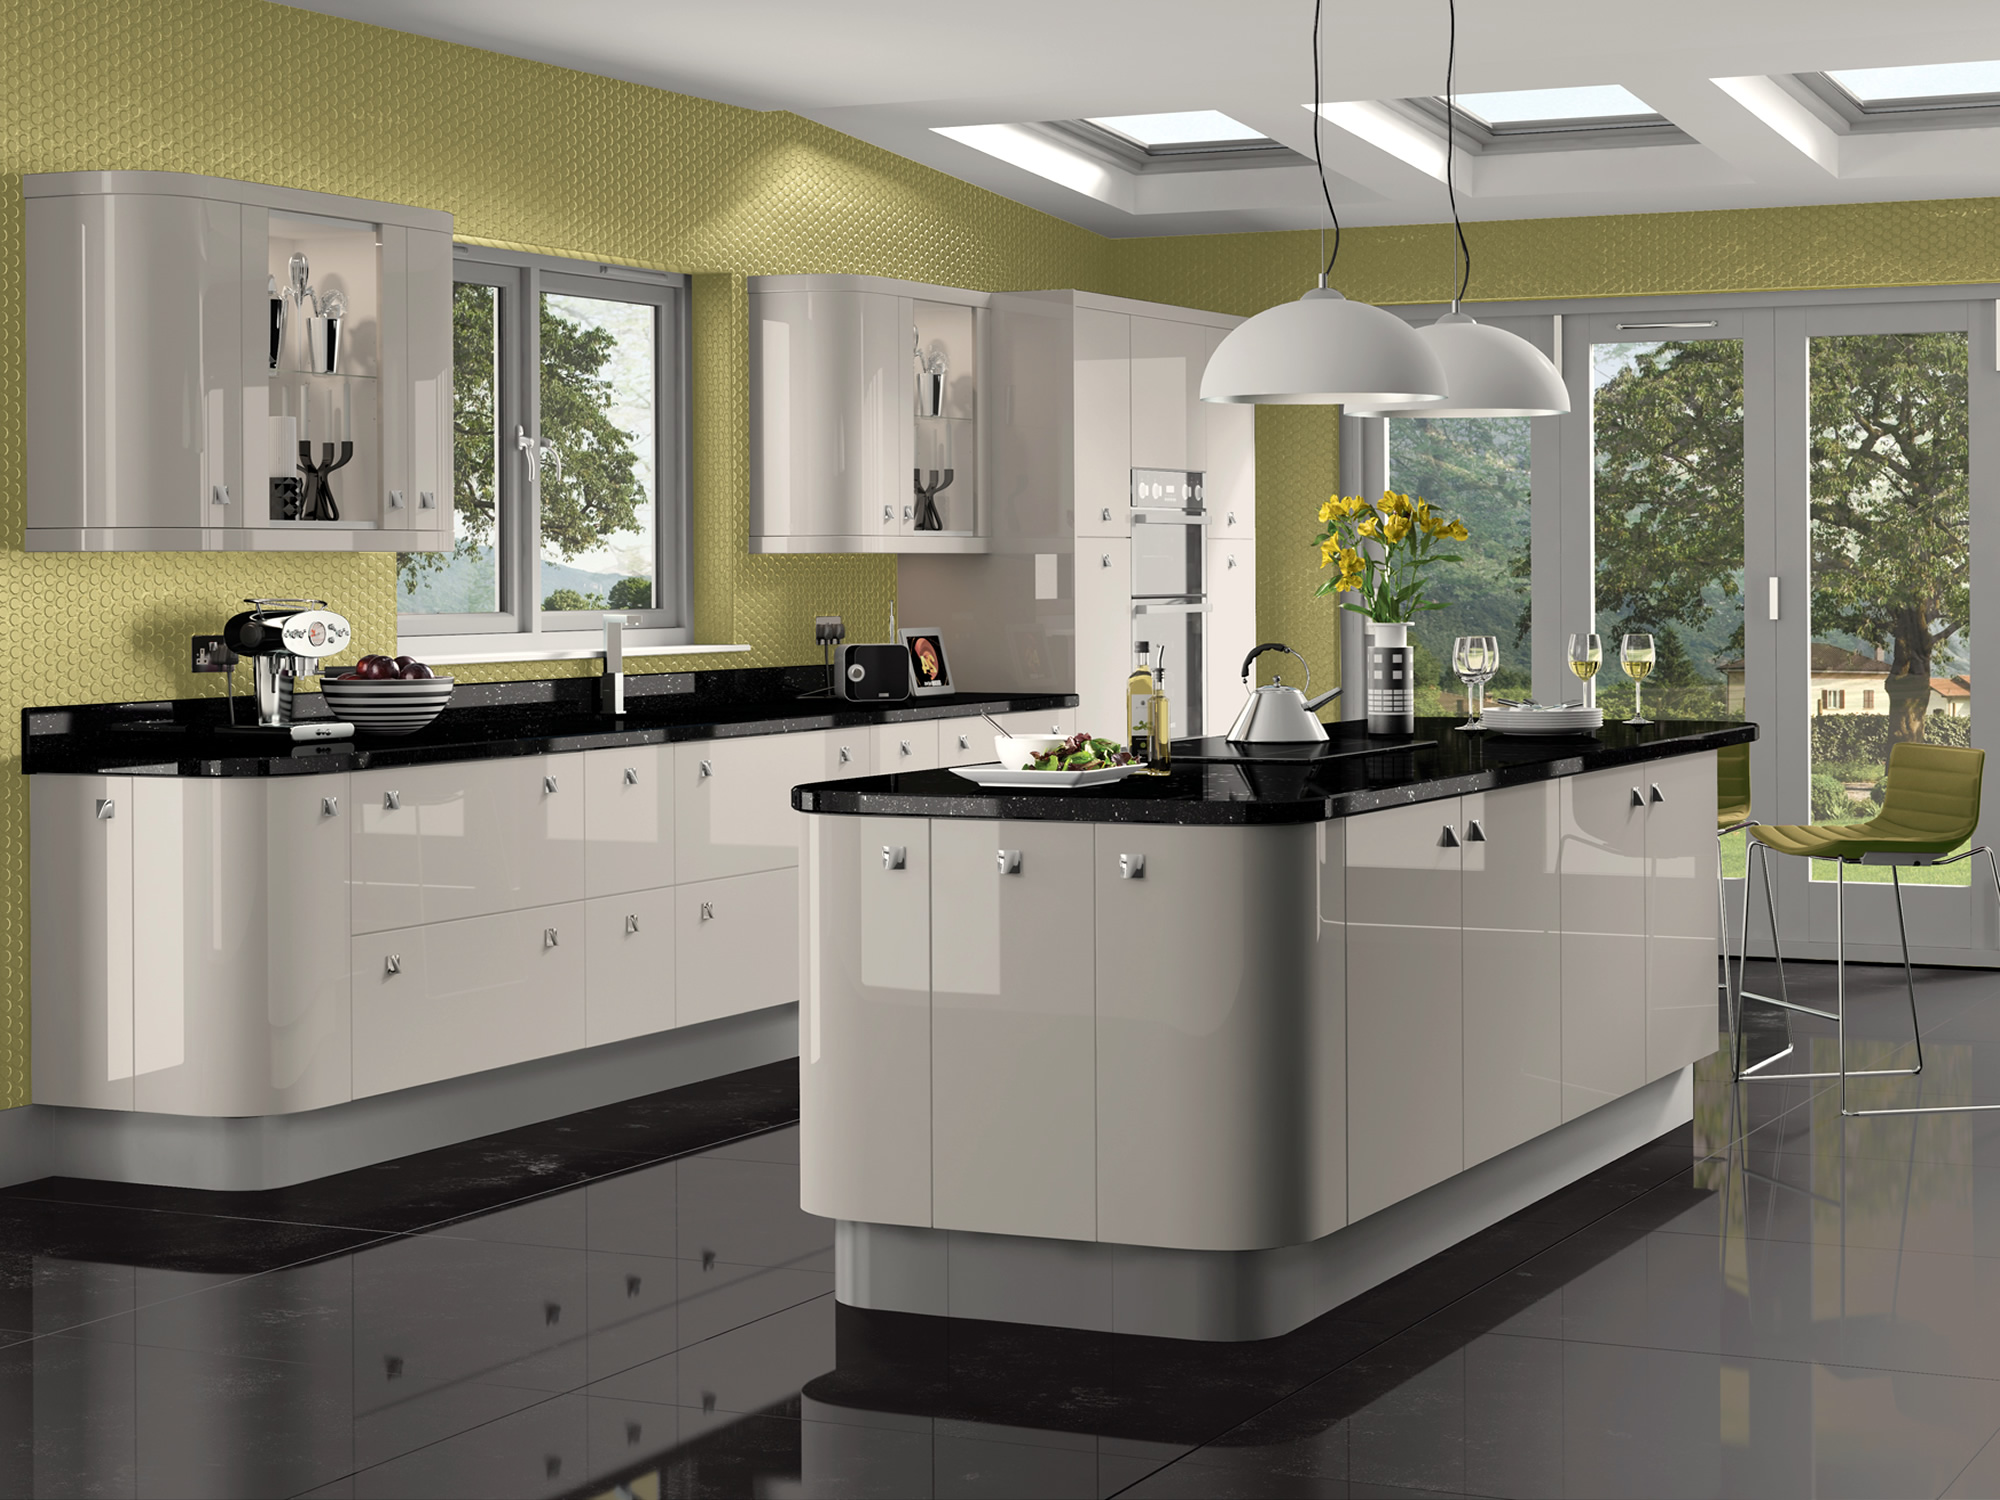 image kashmir kitchens and kitchen design